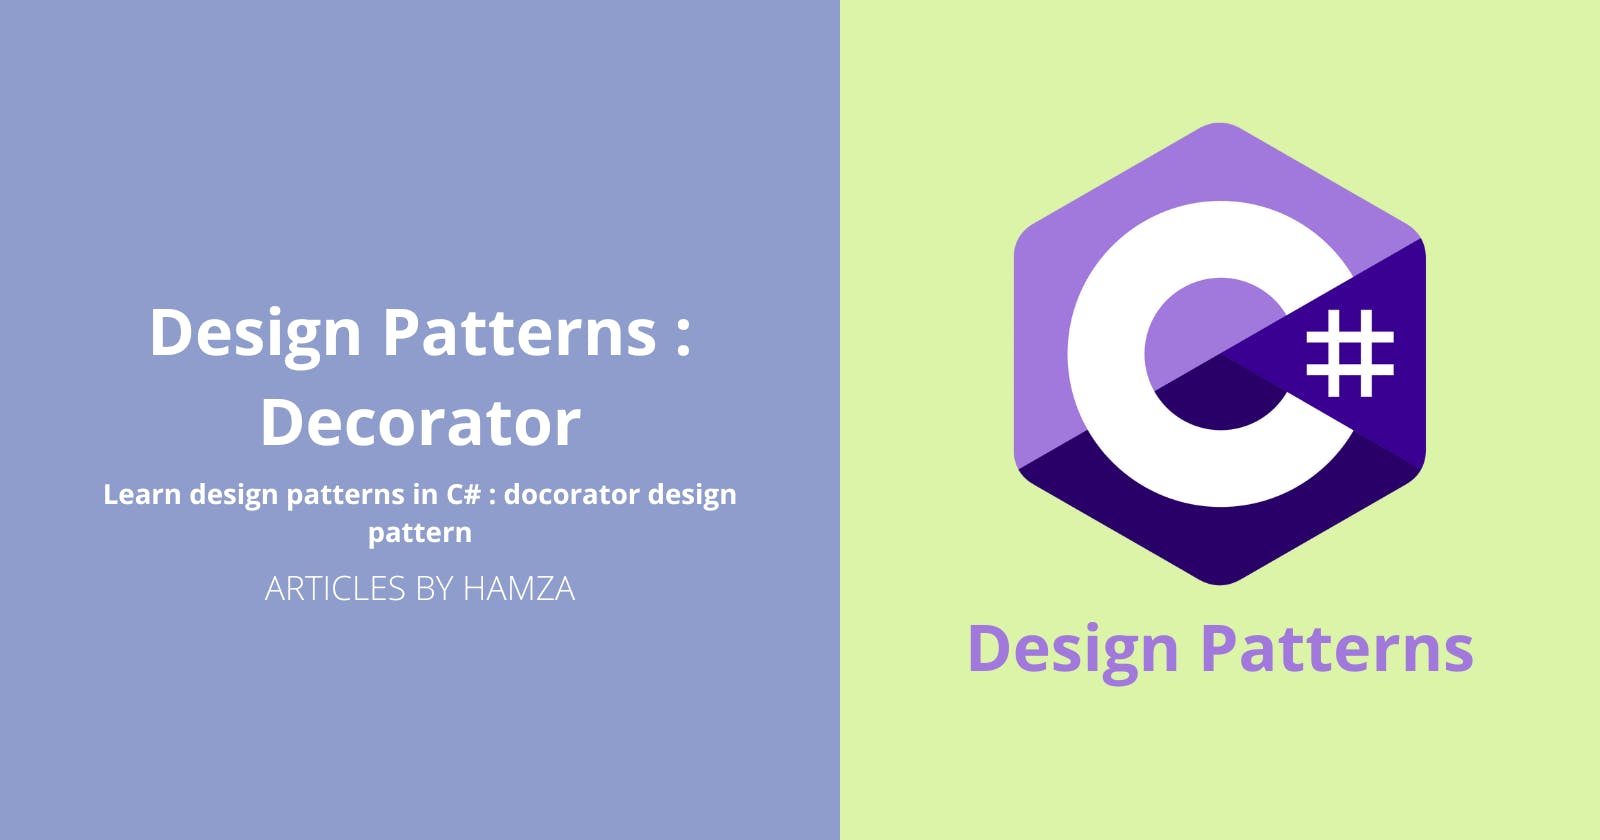 Design Patterns : Decorator